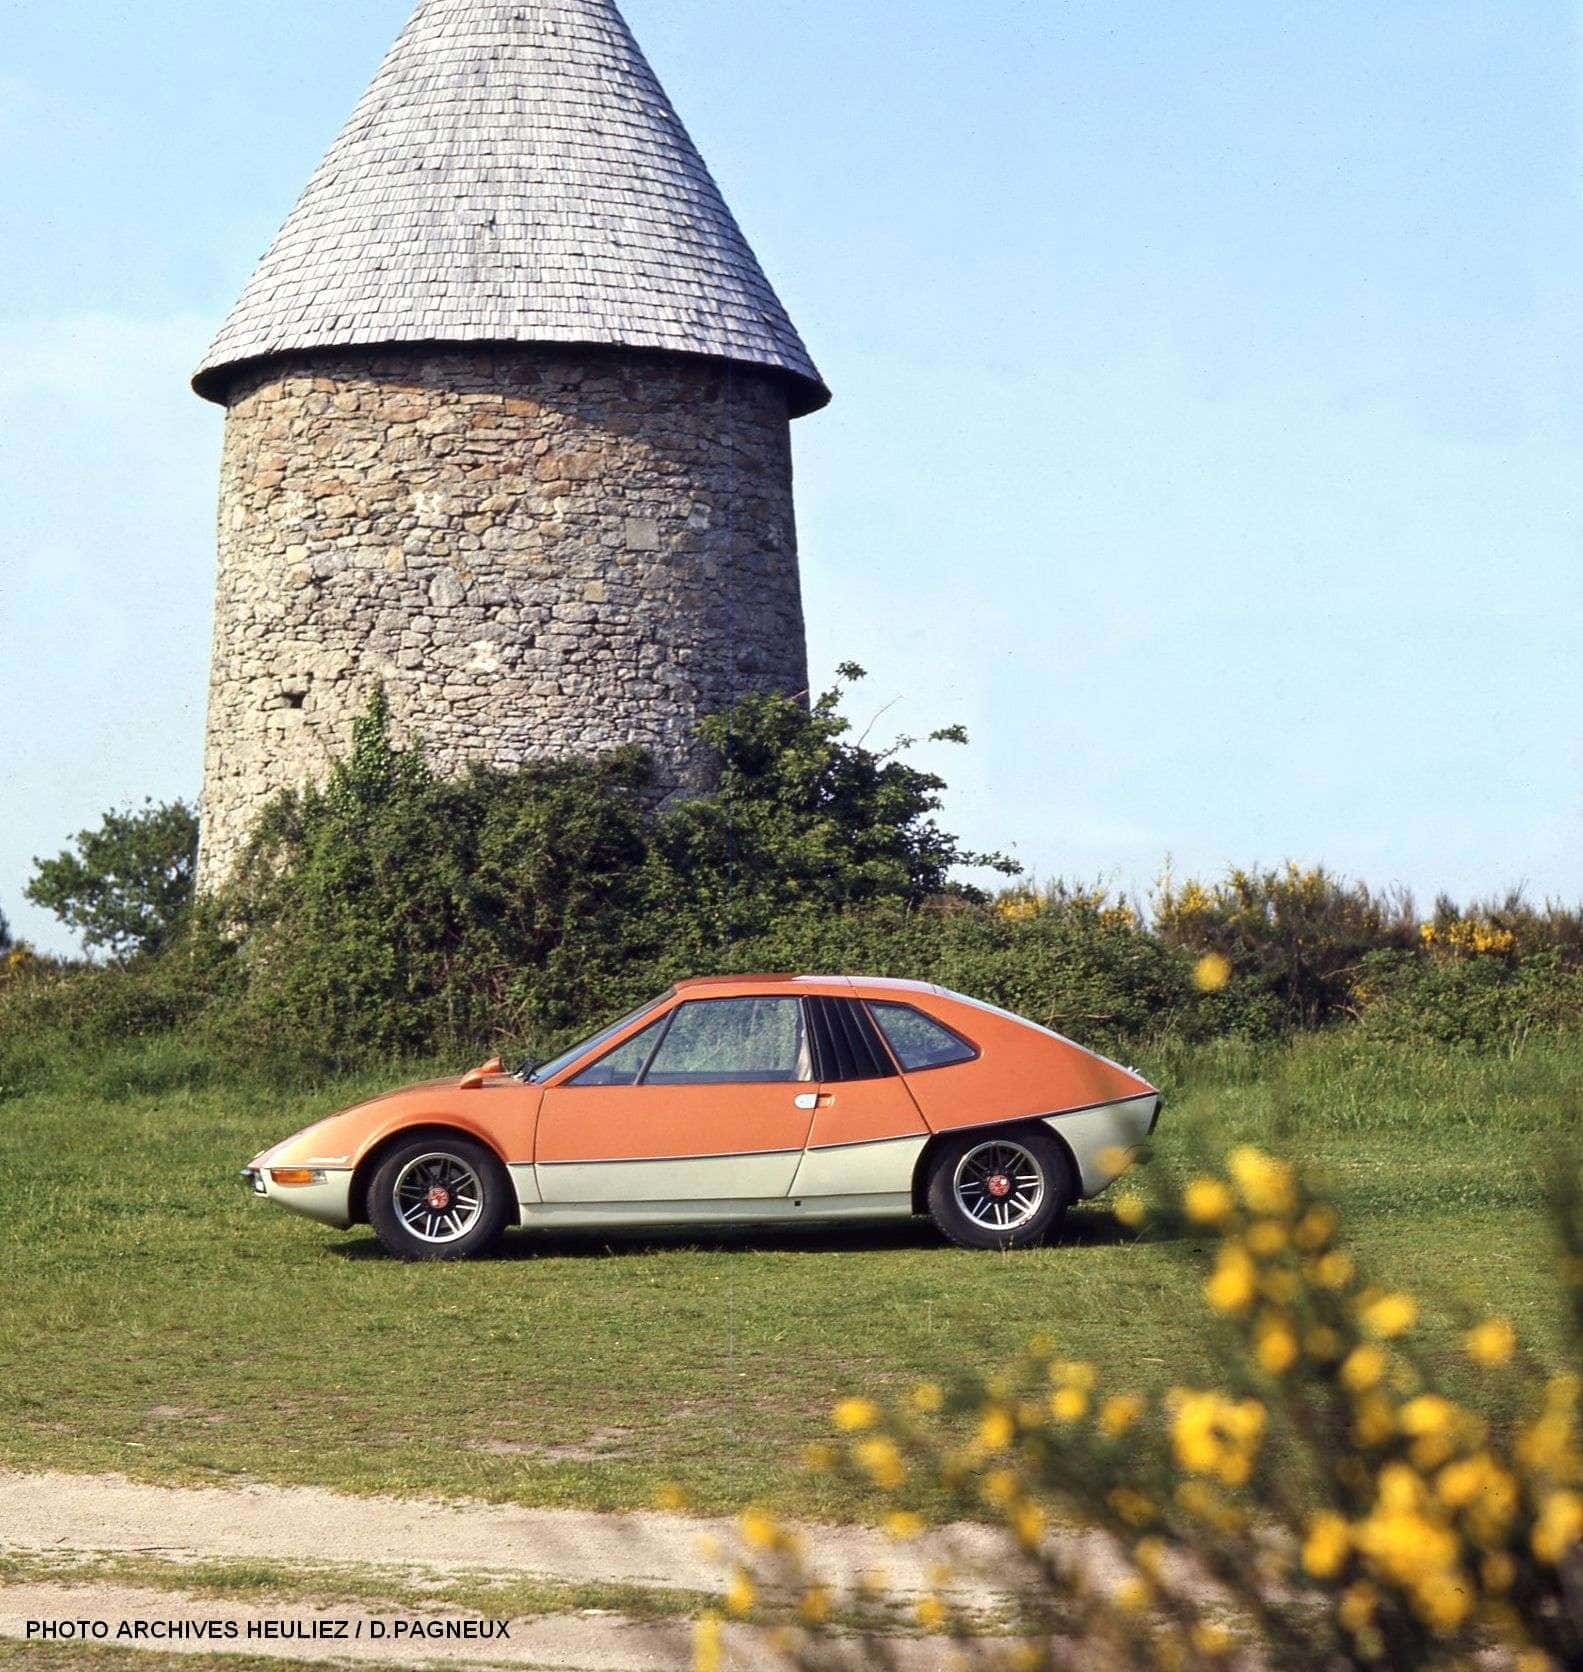 1970 Porsche 914 - Porsche 914-6 Coupe Prototype - ex-Paris and Geneva'70 Motorshows - exPorsche Museum - Used - VIN 130005___________ - 14,500 Miles - 6 cyl - 2WD - Manual - Coupe - Orange - Strasbourg, France